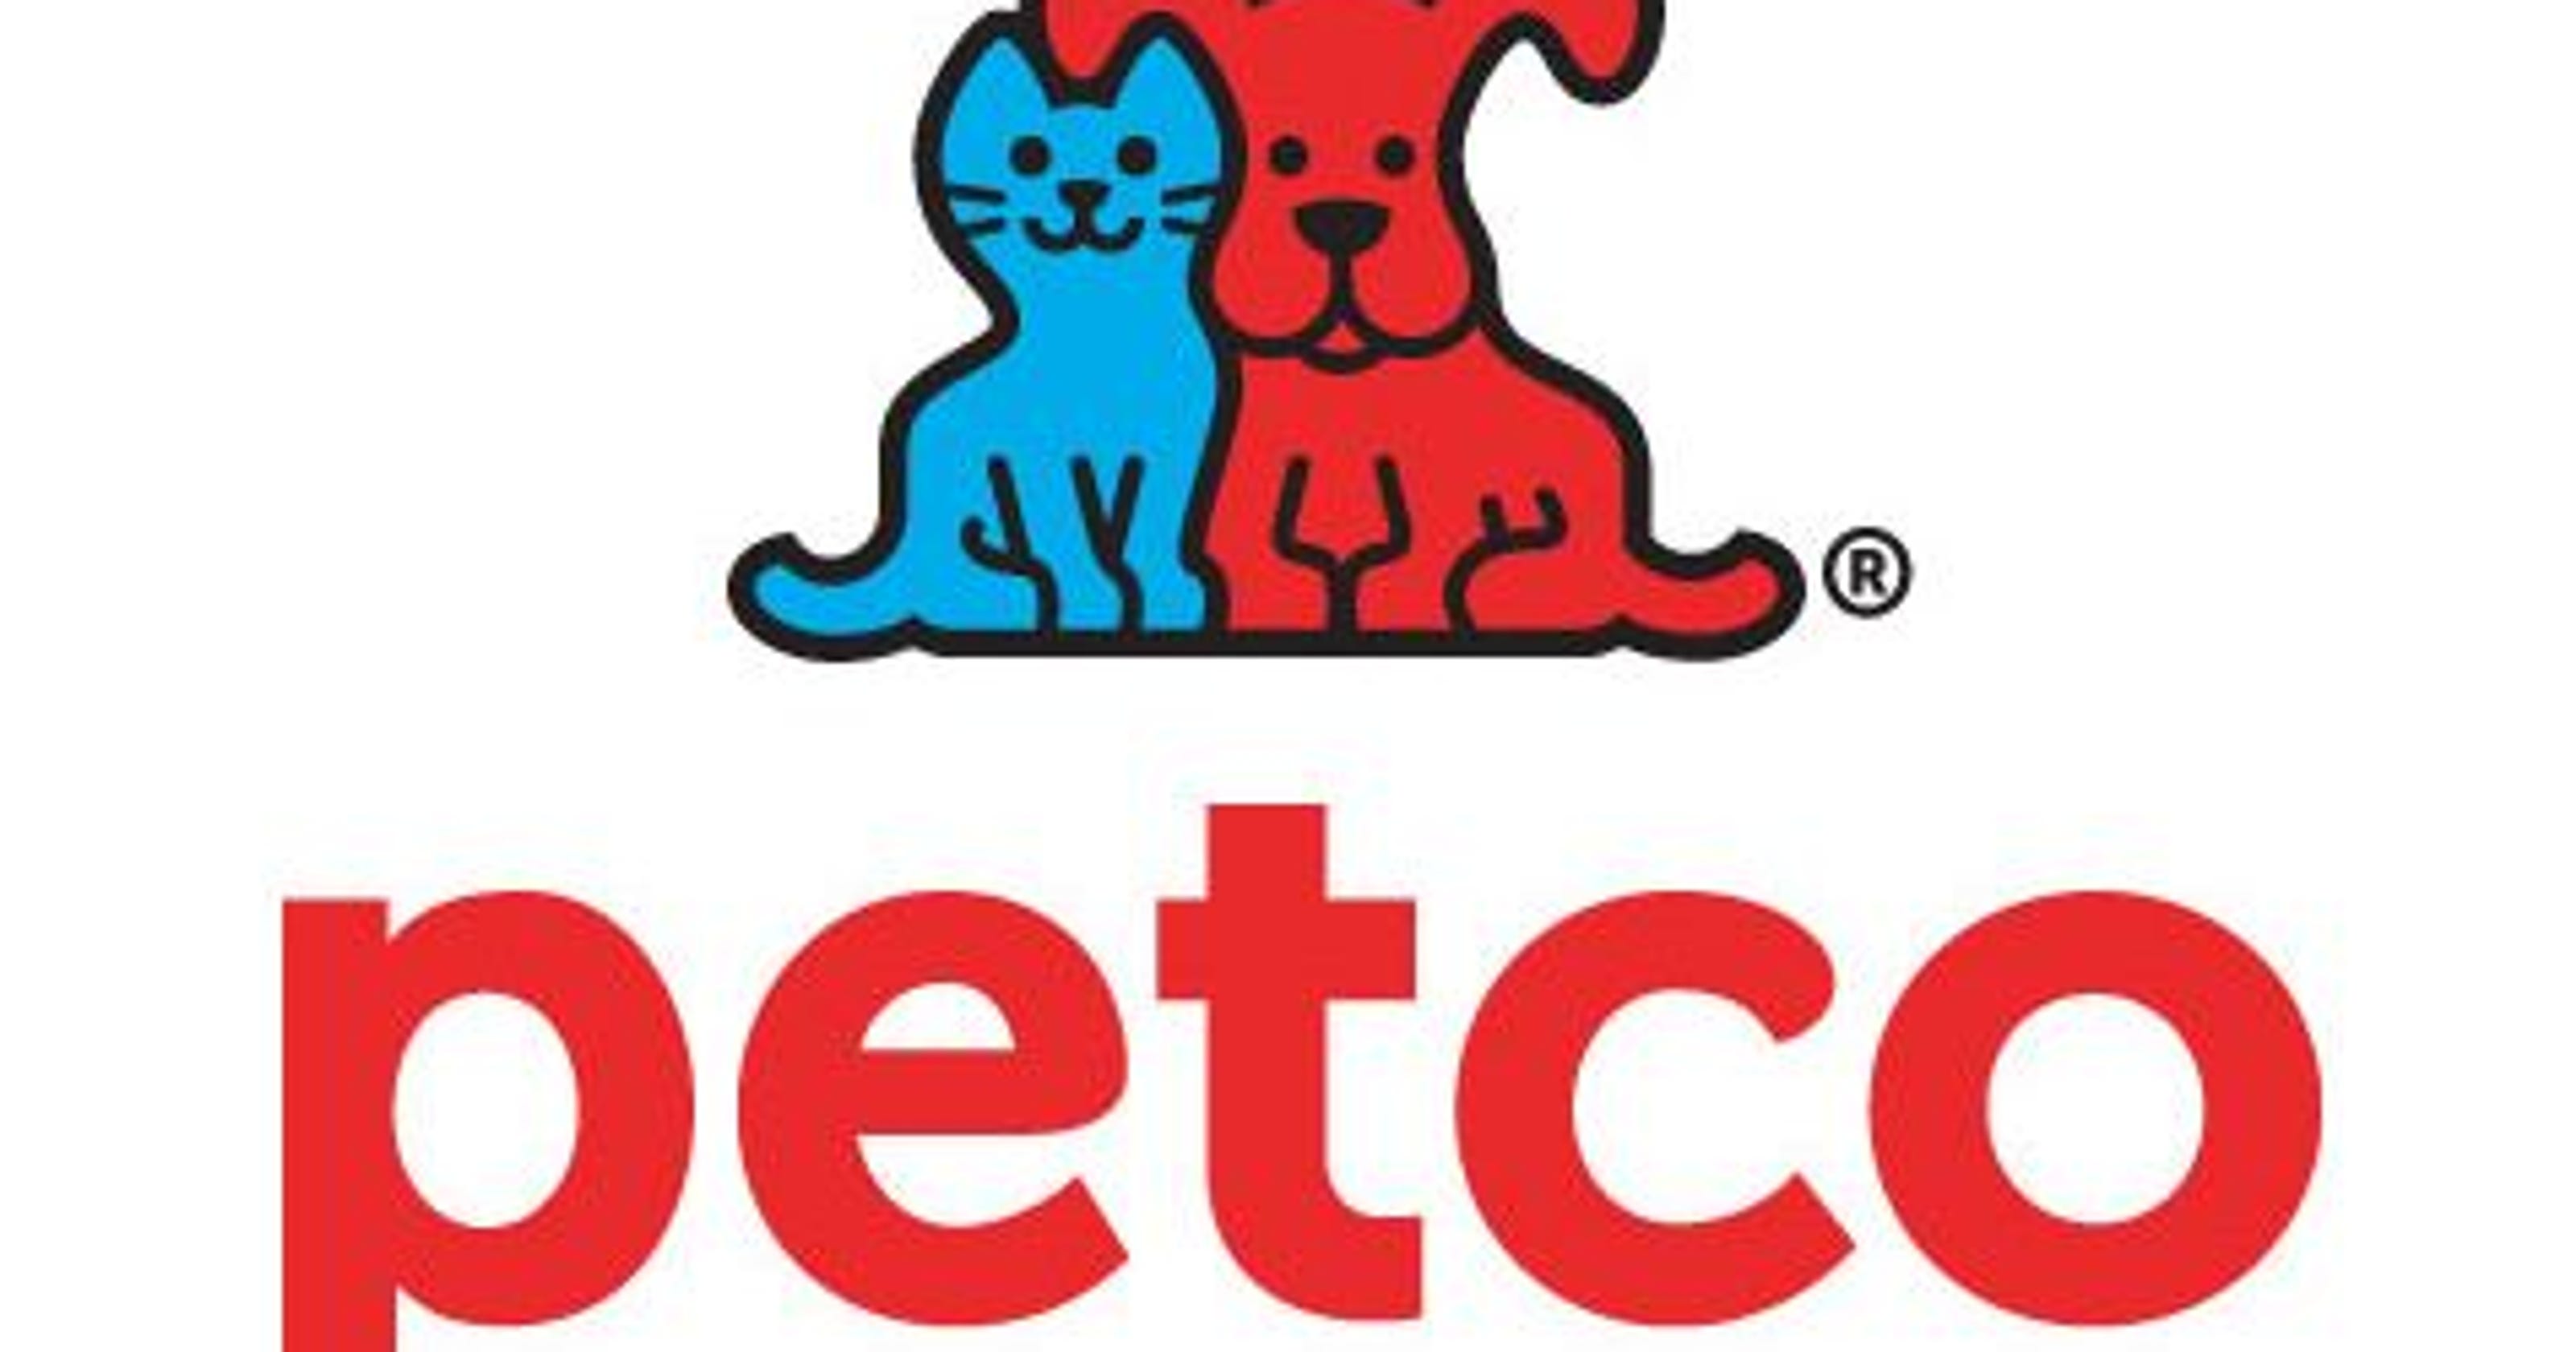 Petco launches Petco Pet Wellness Council